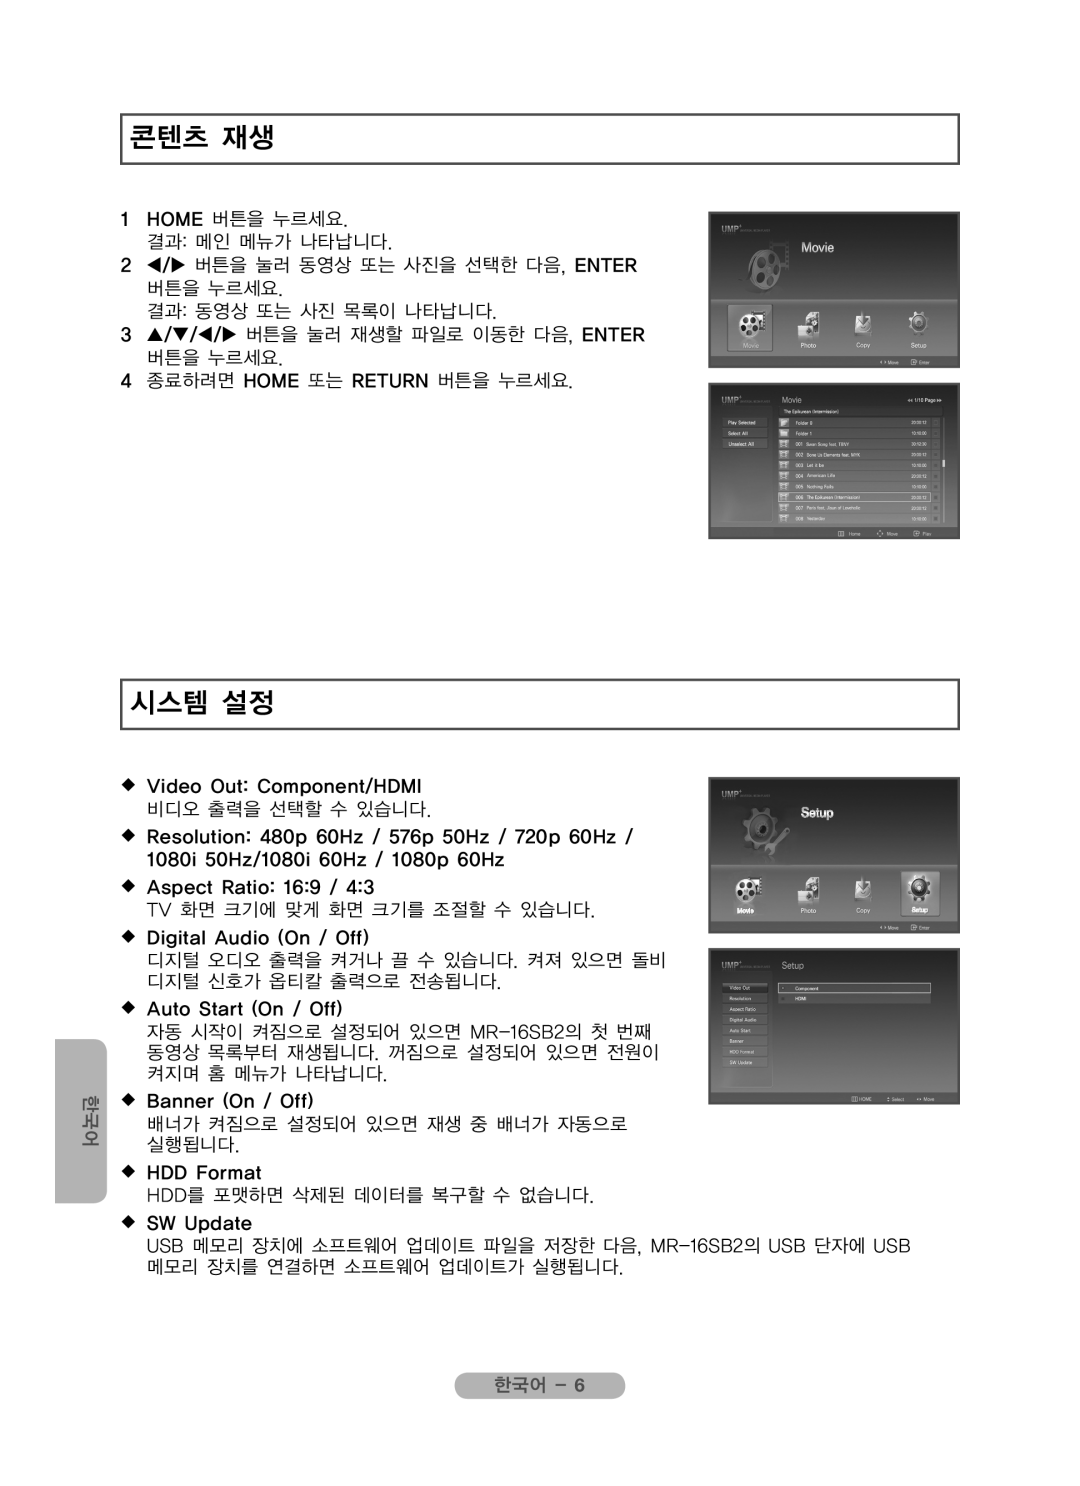 Samsung MR-16SB2 manual 콘텐츠 재생, 시스템 설정 